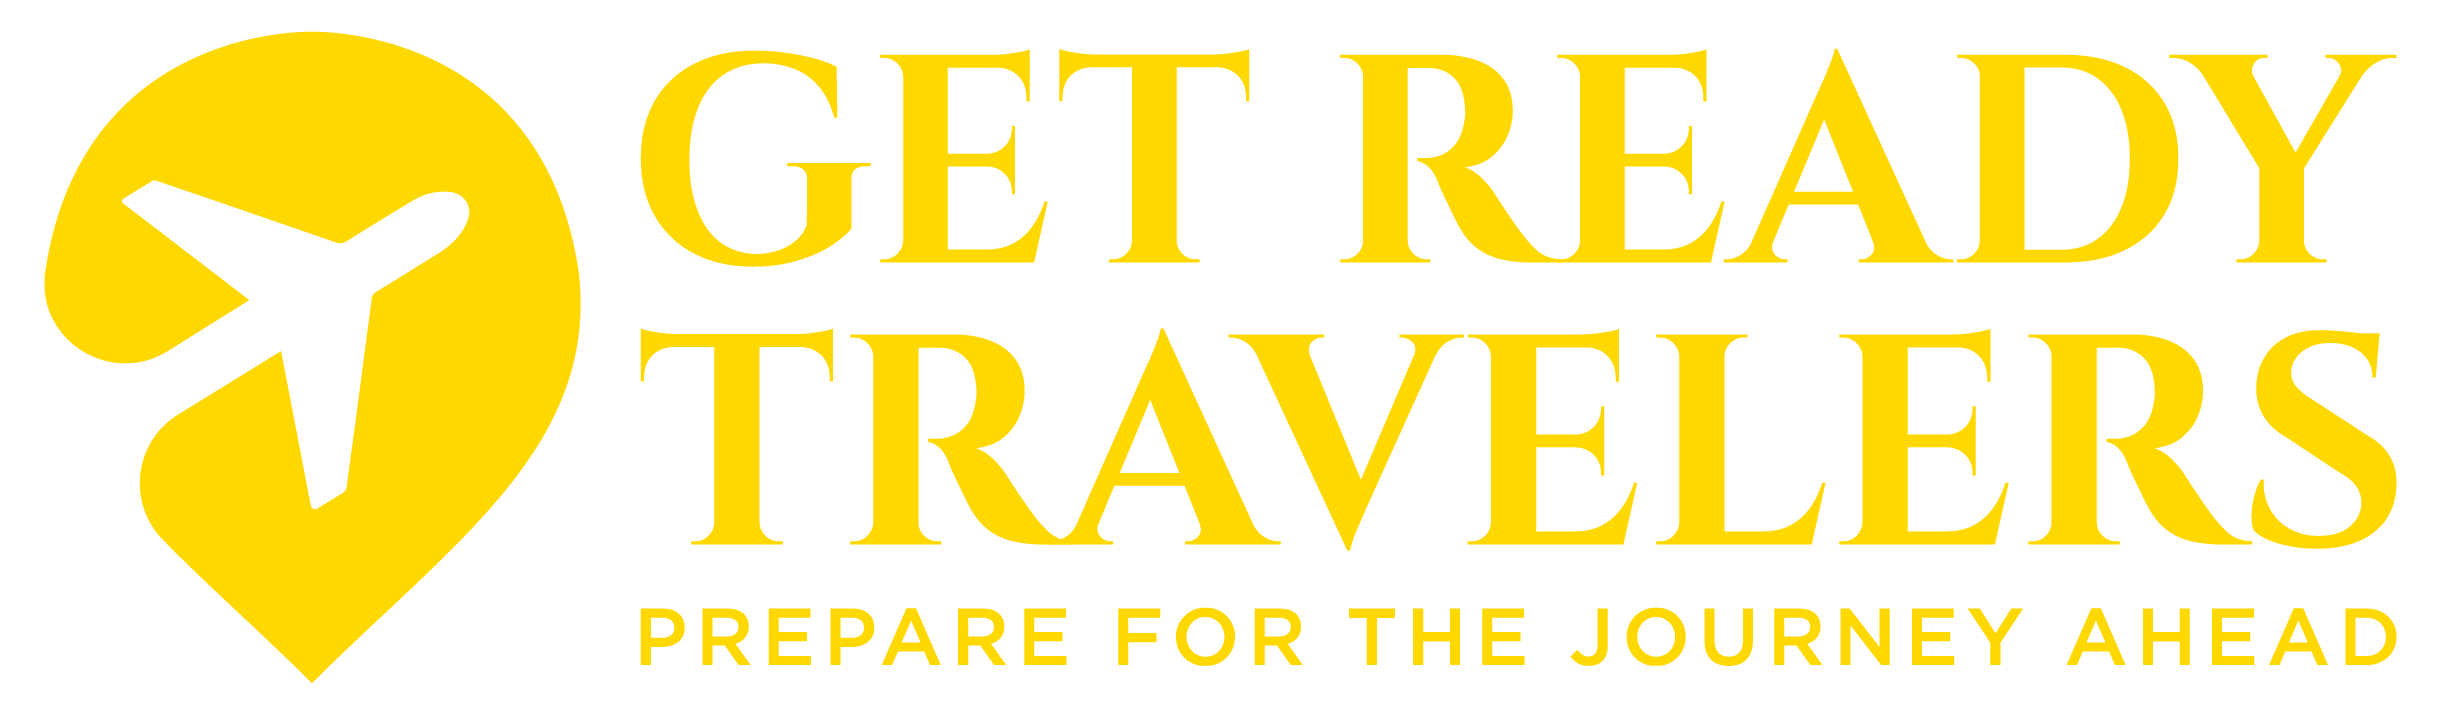 Get Ready Travelers logo